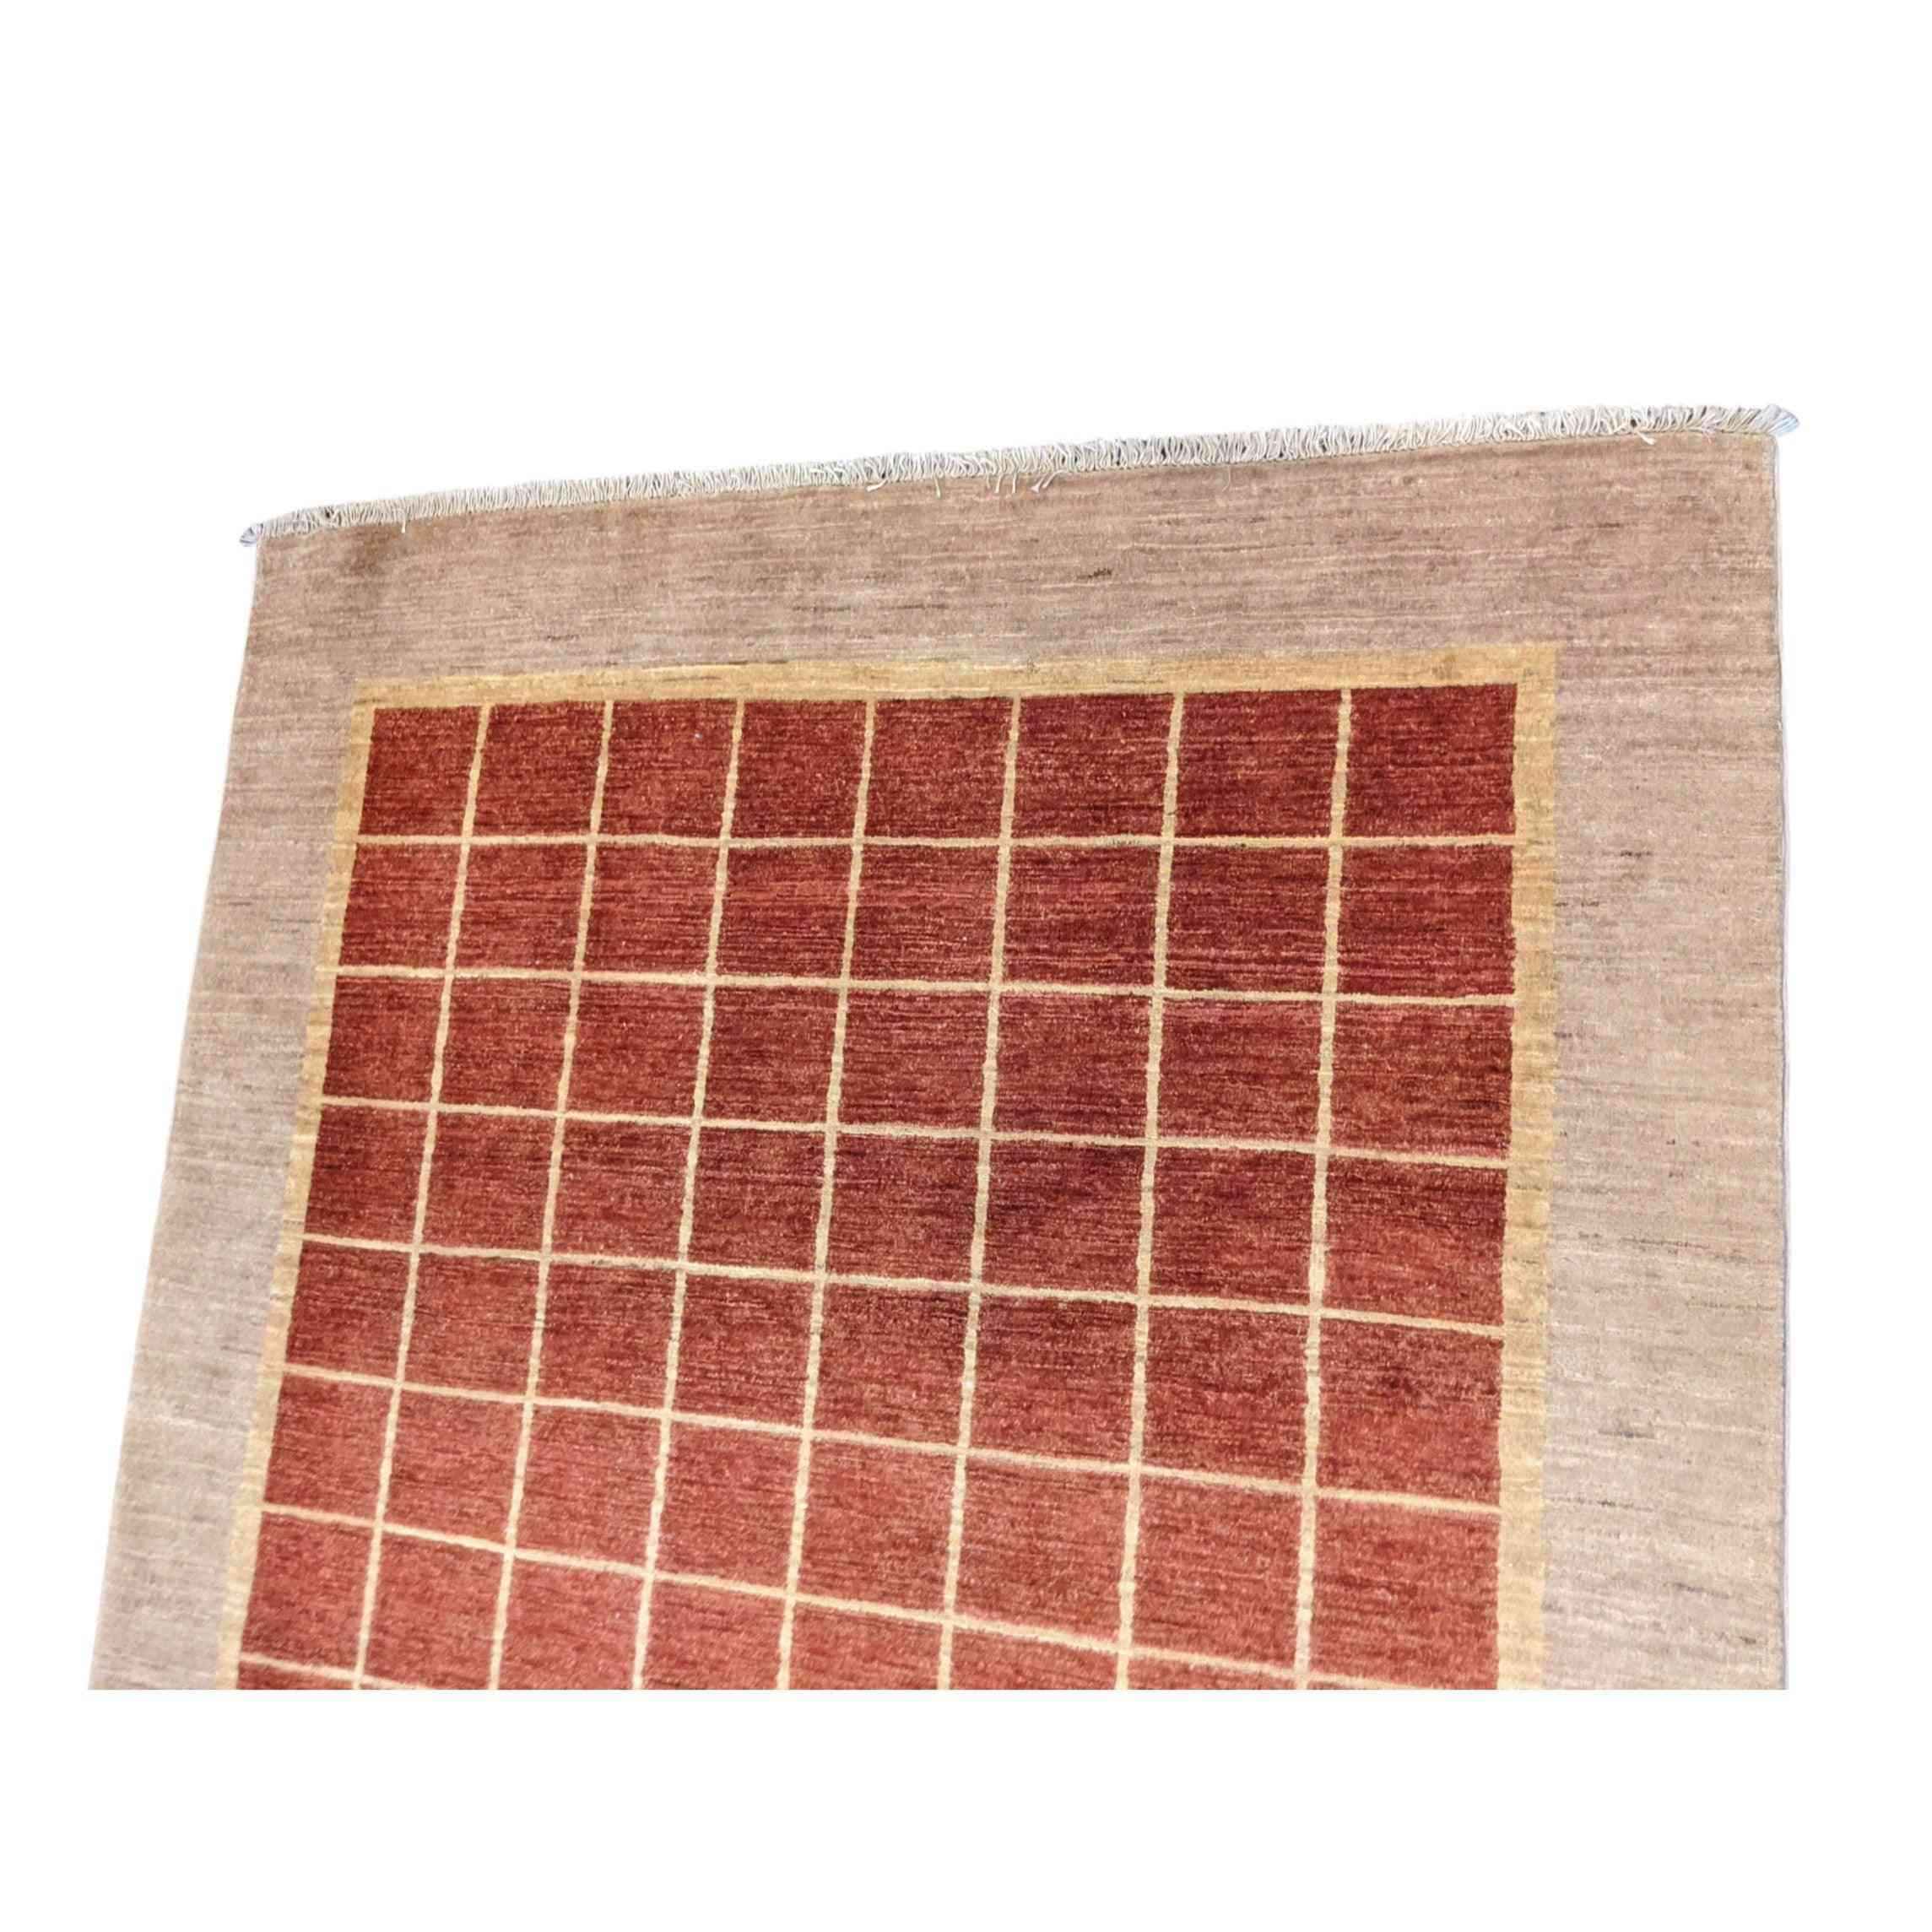 231 x 171 cm Modern Handmade Natural dye check design Red Rug - Rugmaster